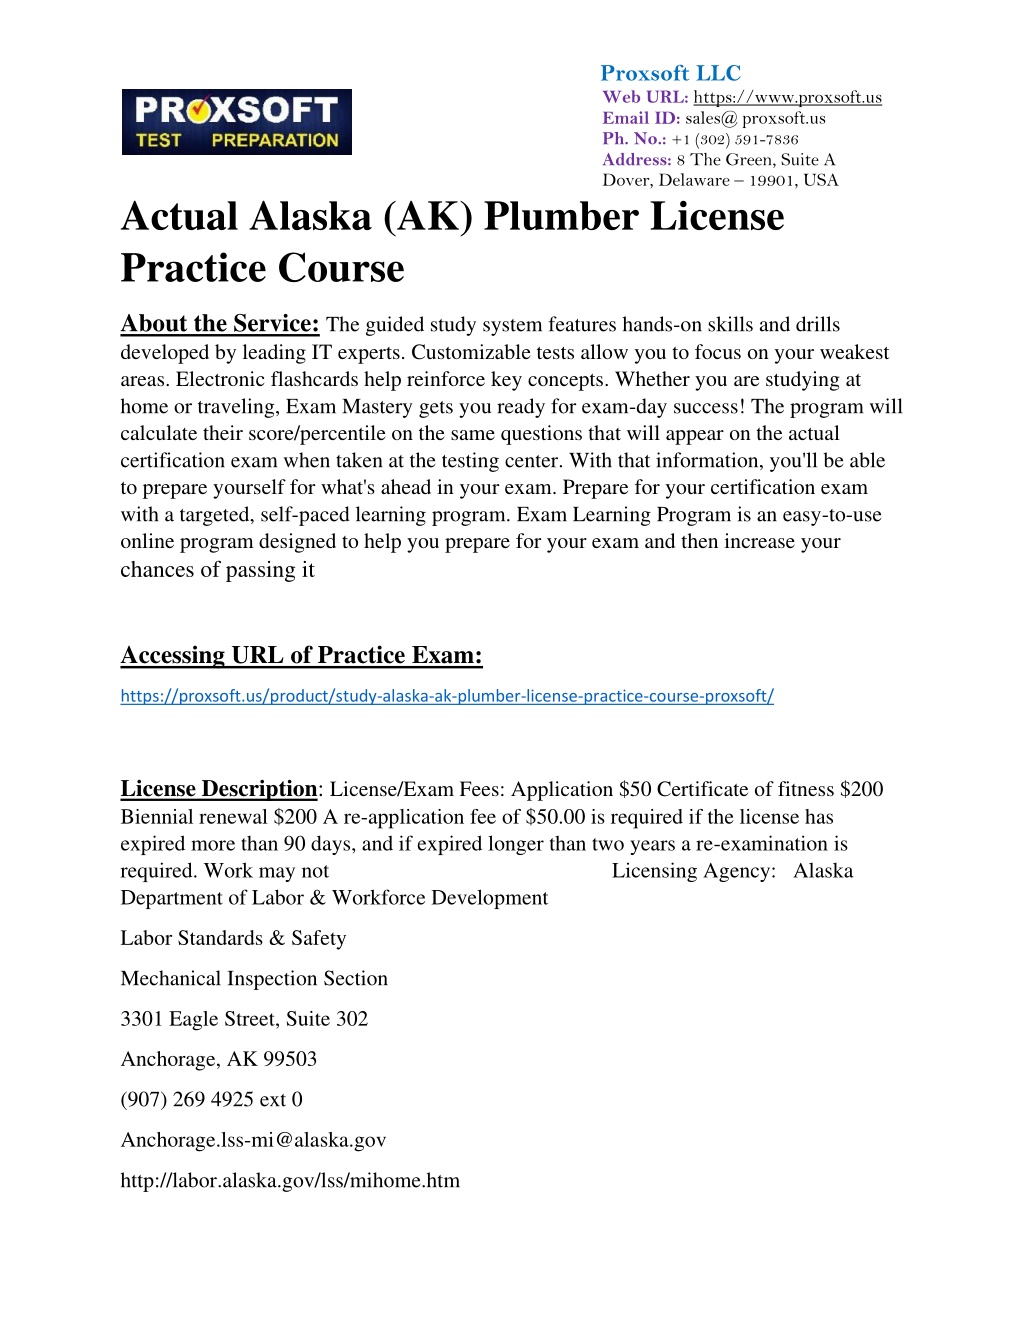 Alaska plumber installer license prep class instal the last version for apple